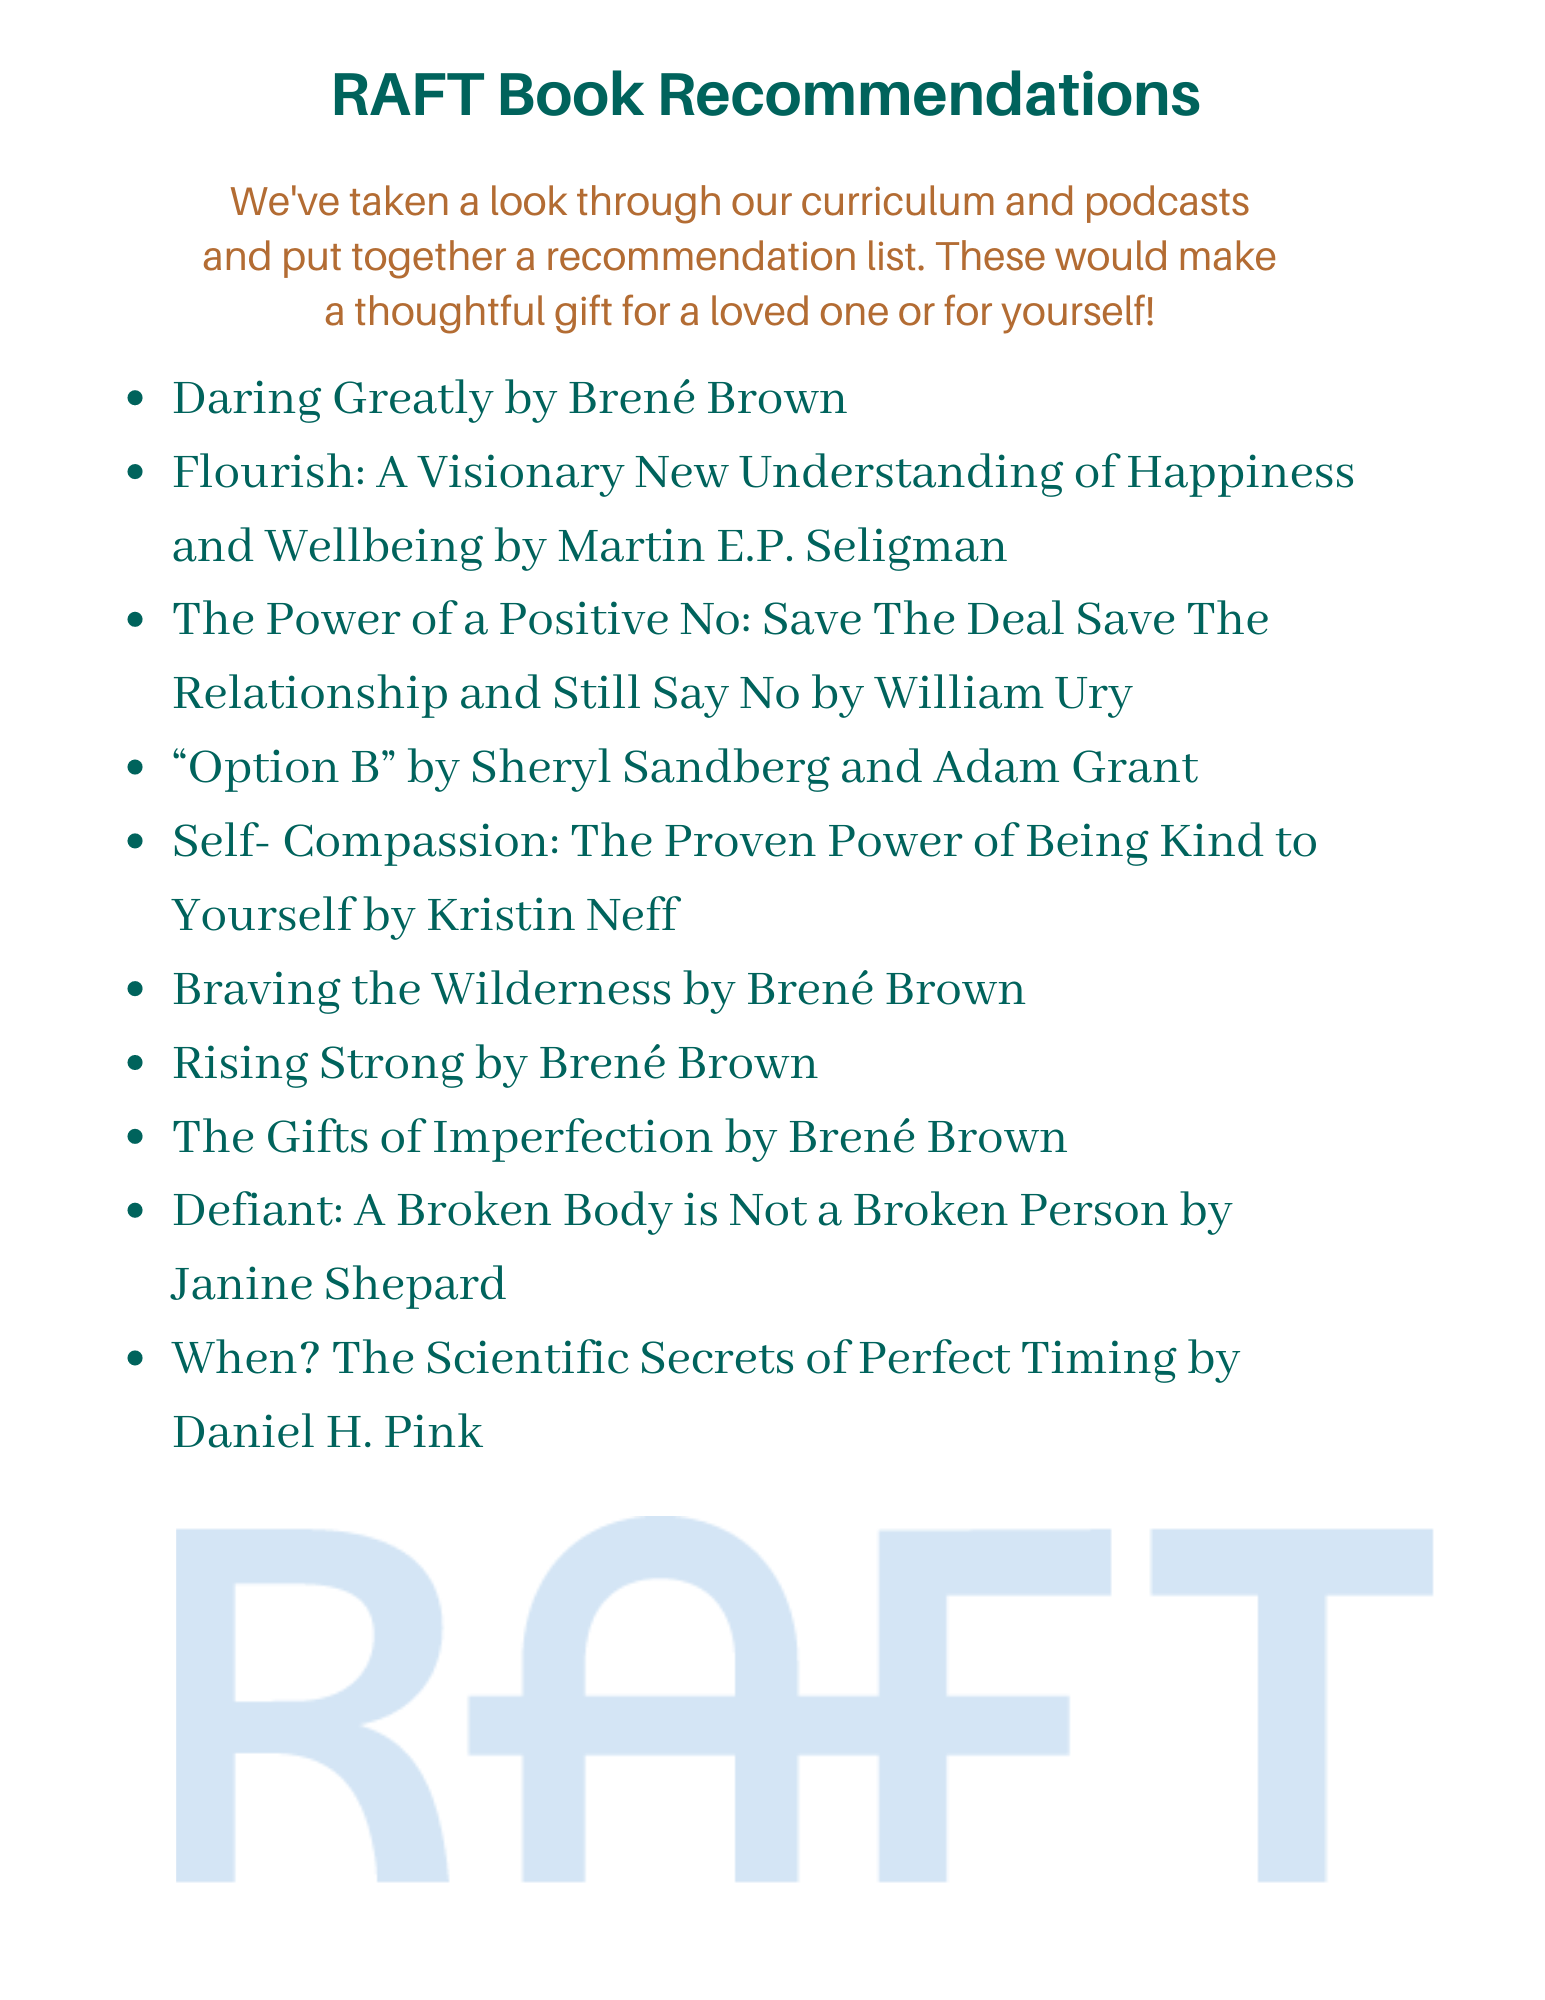 RAFT Booklist September 2020